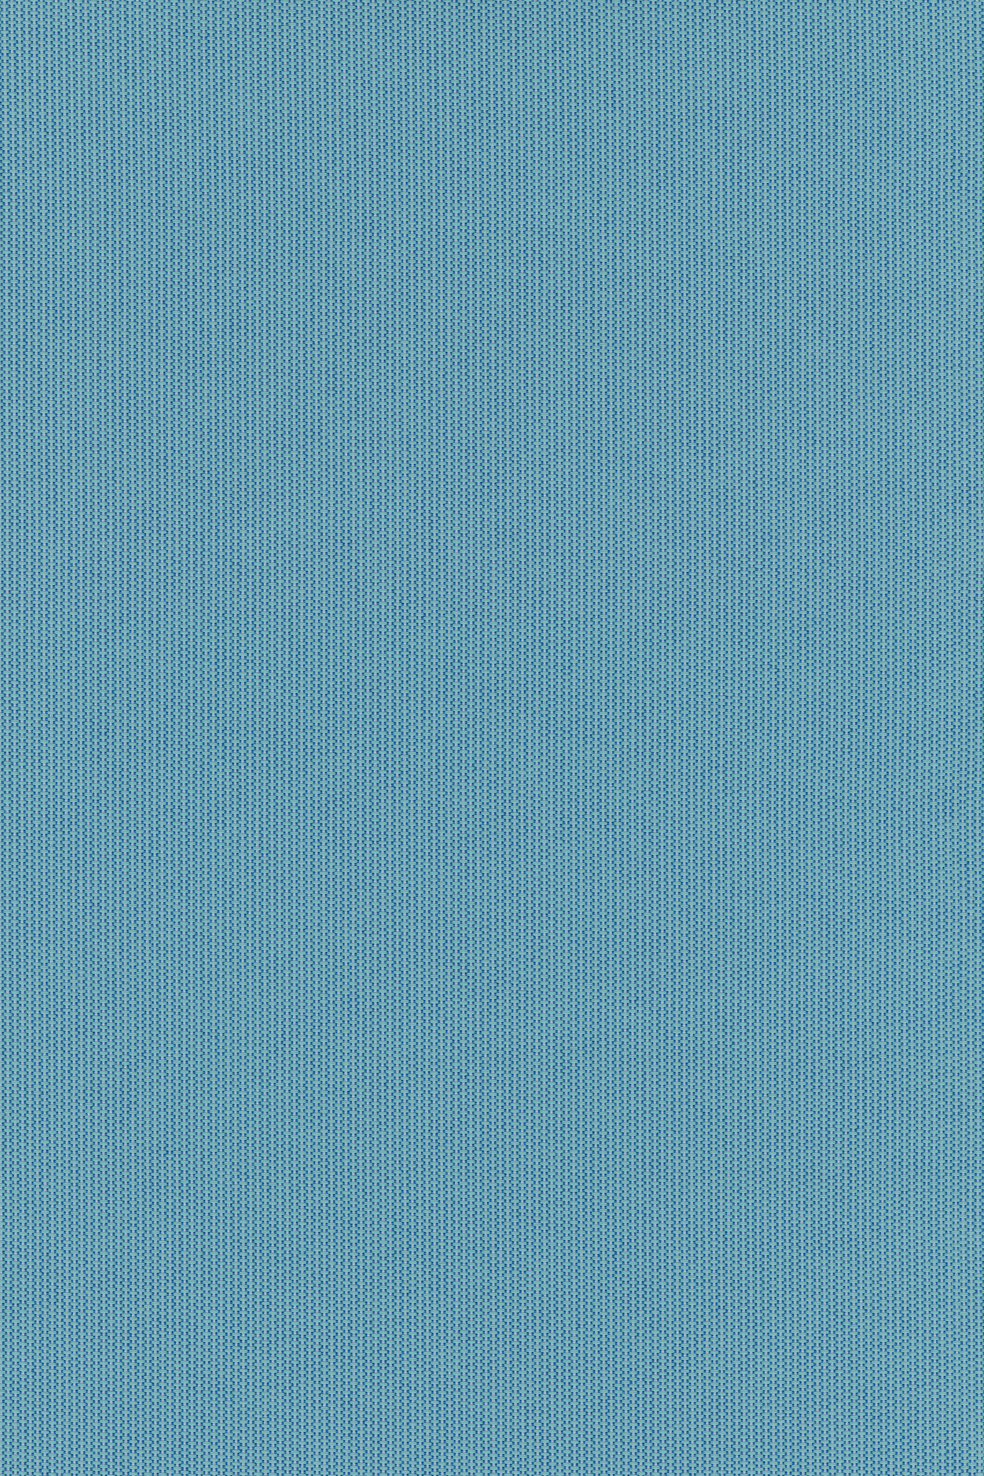 Fabric sample Patio Outdoor 740 blue